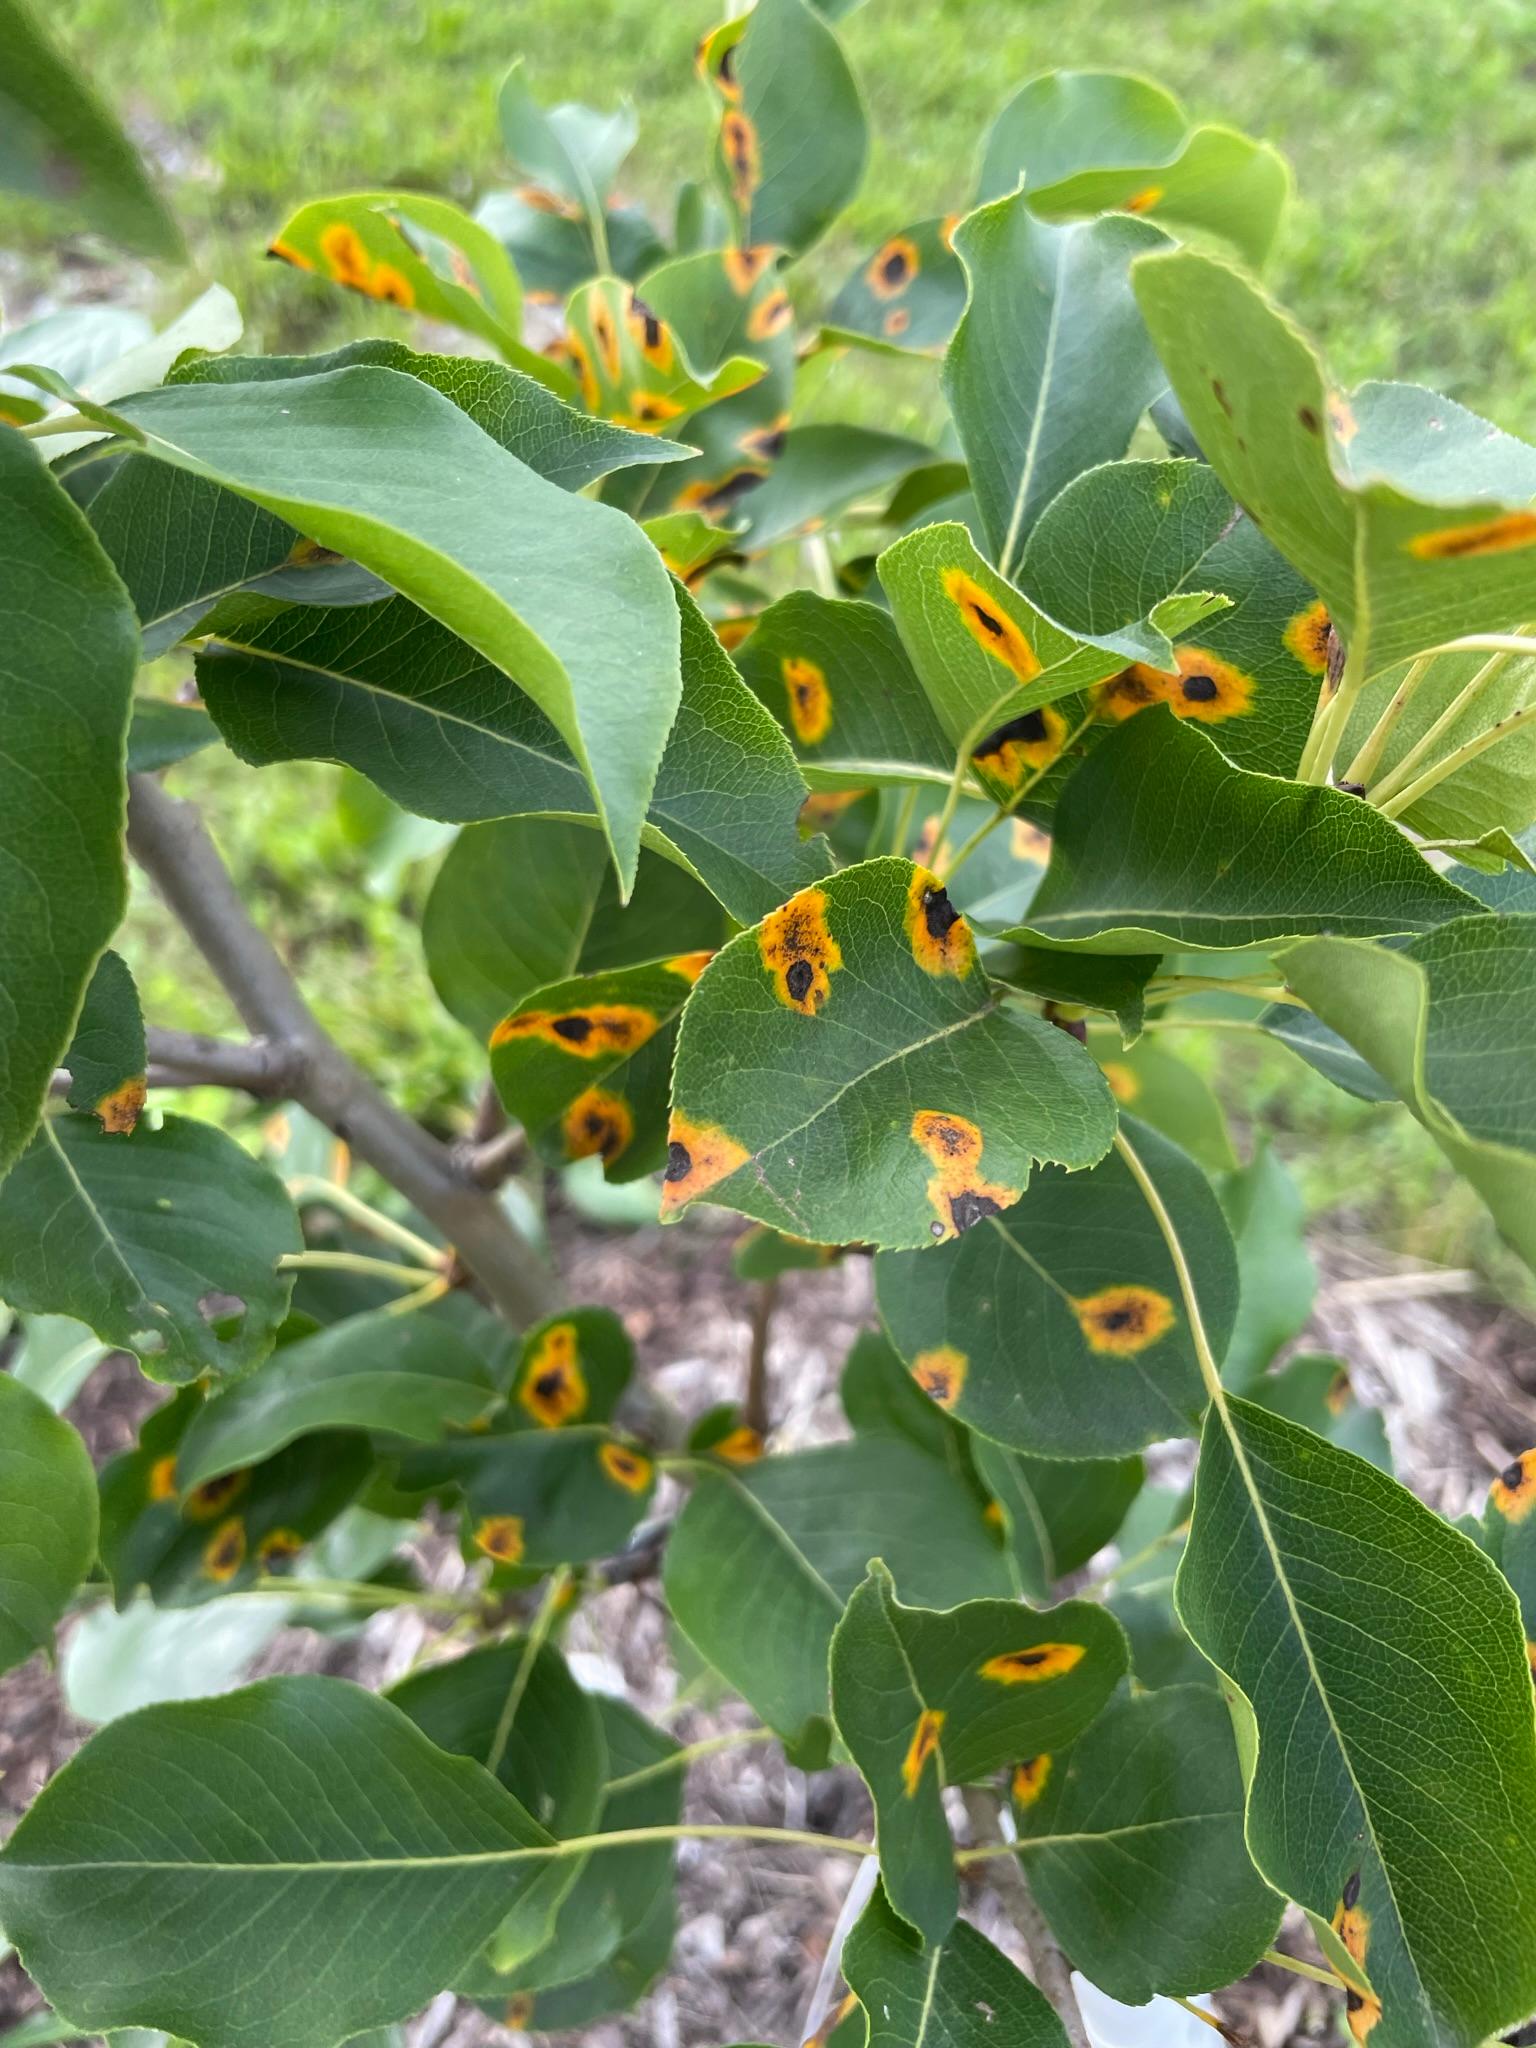 Orange and black spots on leaves.